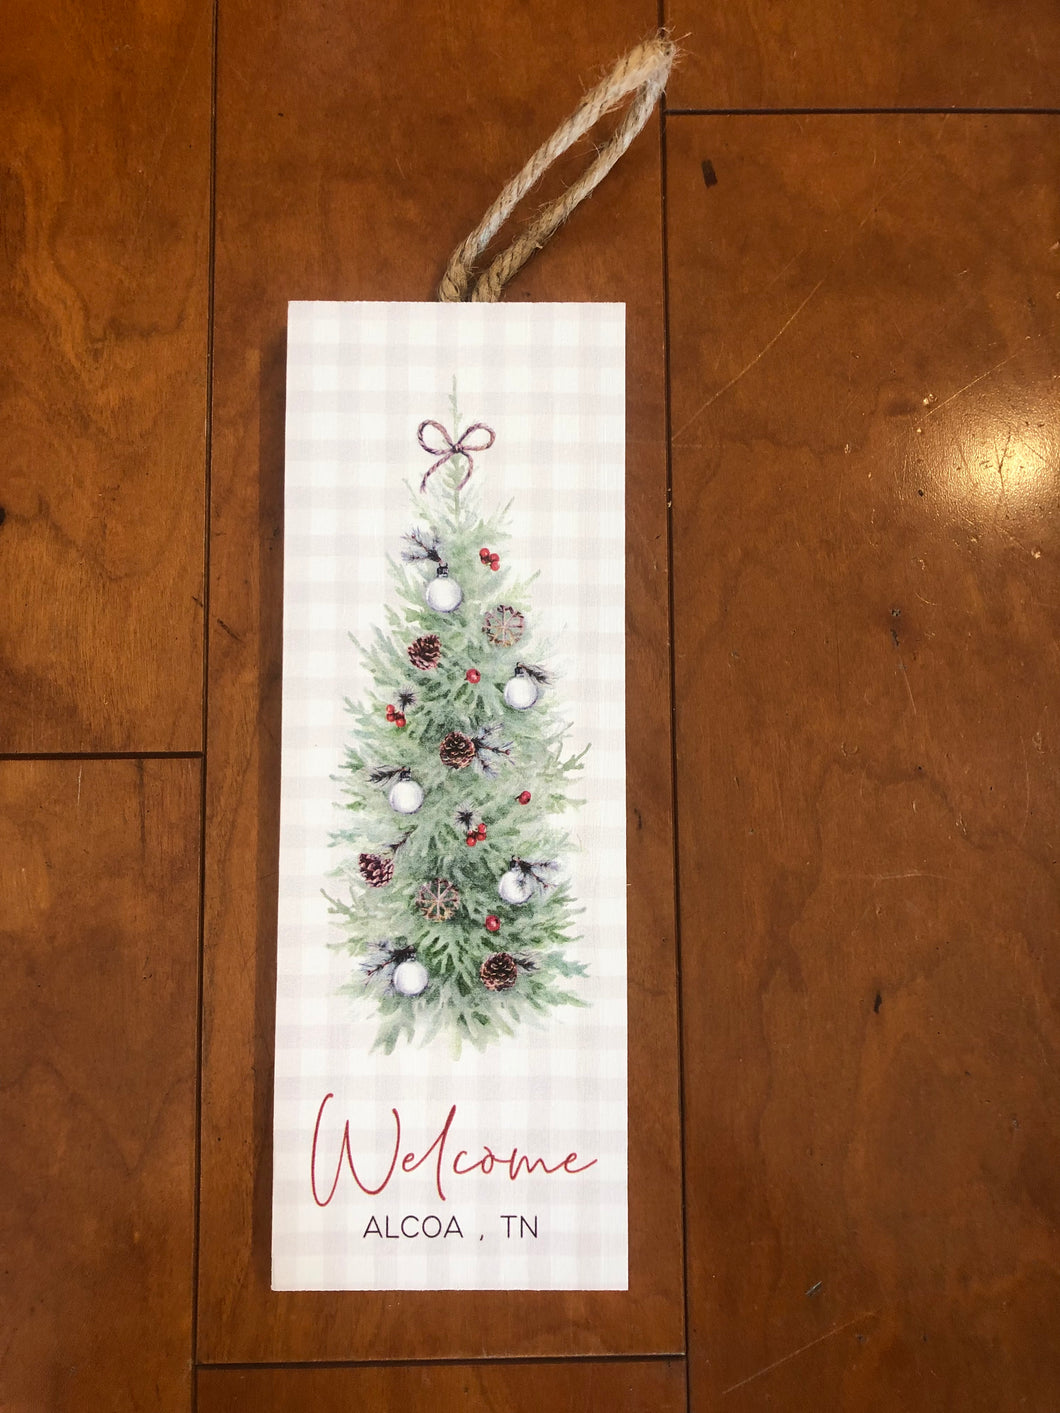 Welcome Christmas Tree Sign - Alcoa, TN